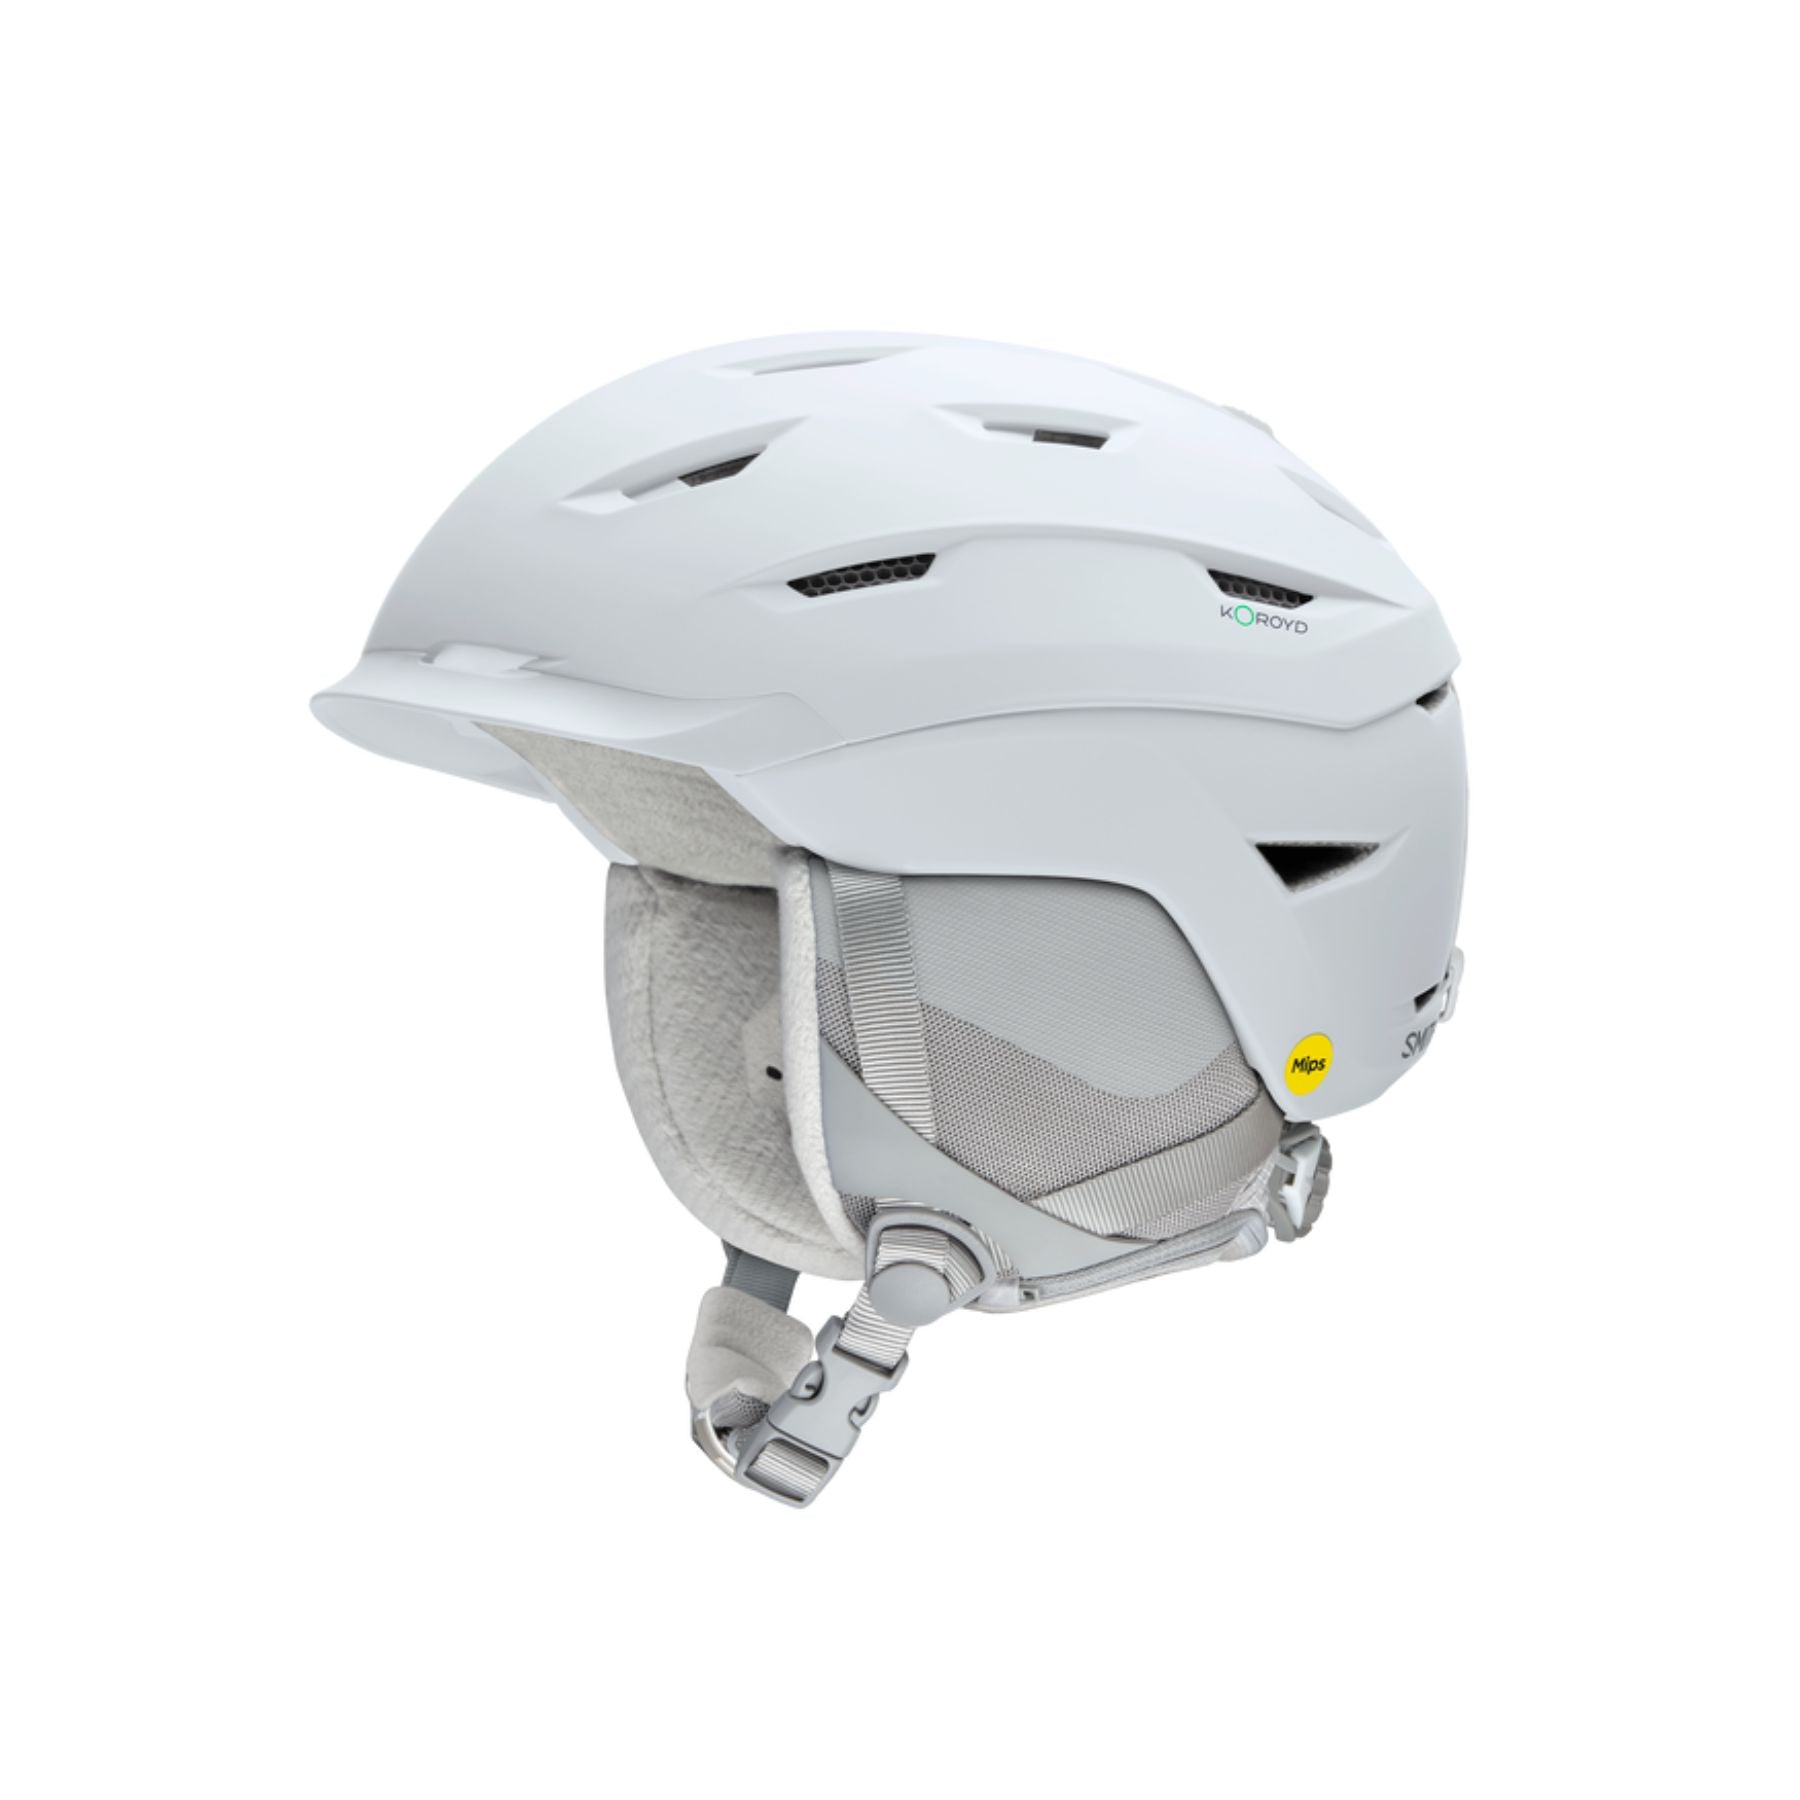 Smith Liberty Mips® Helmet in Matte White